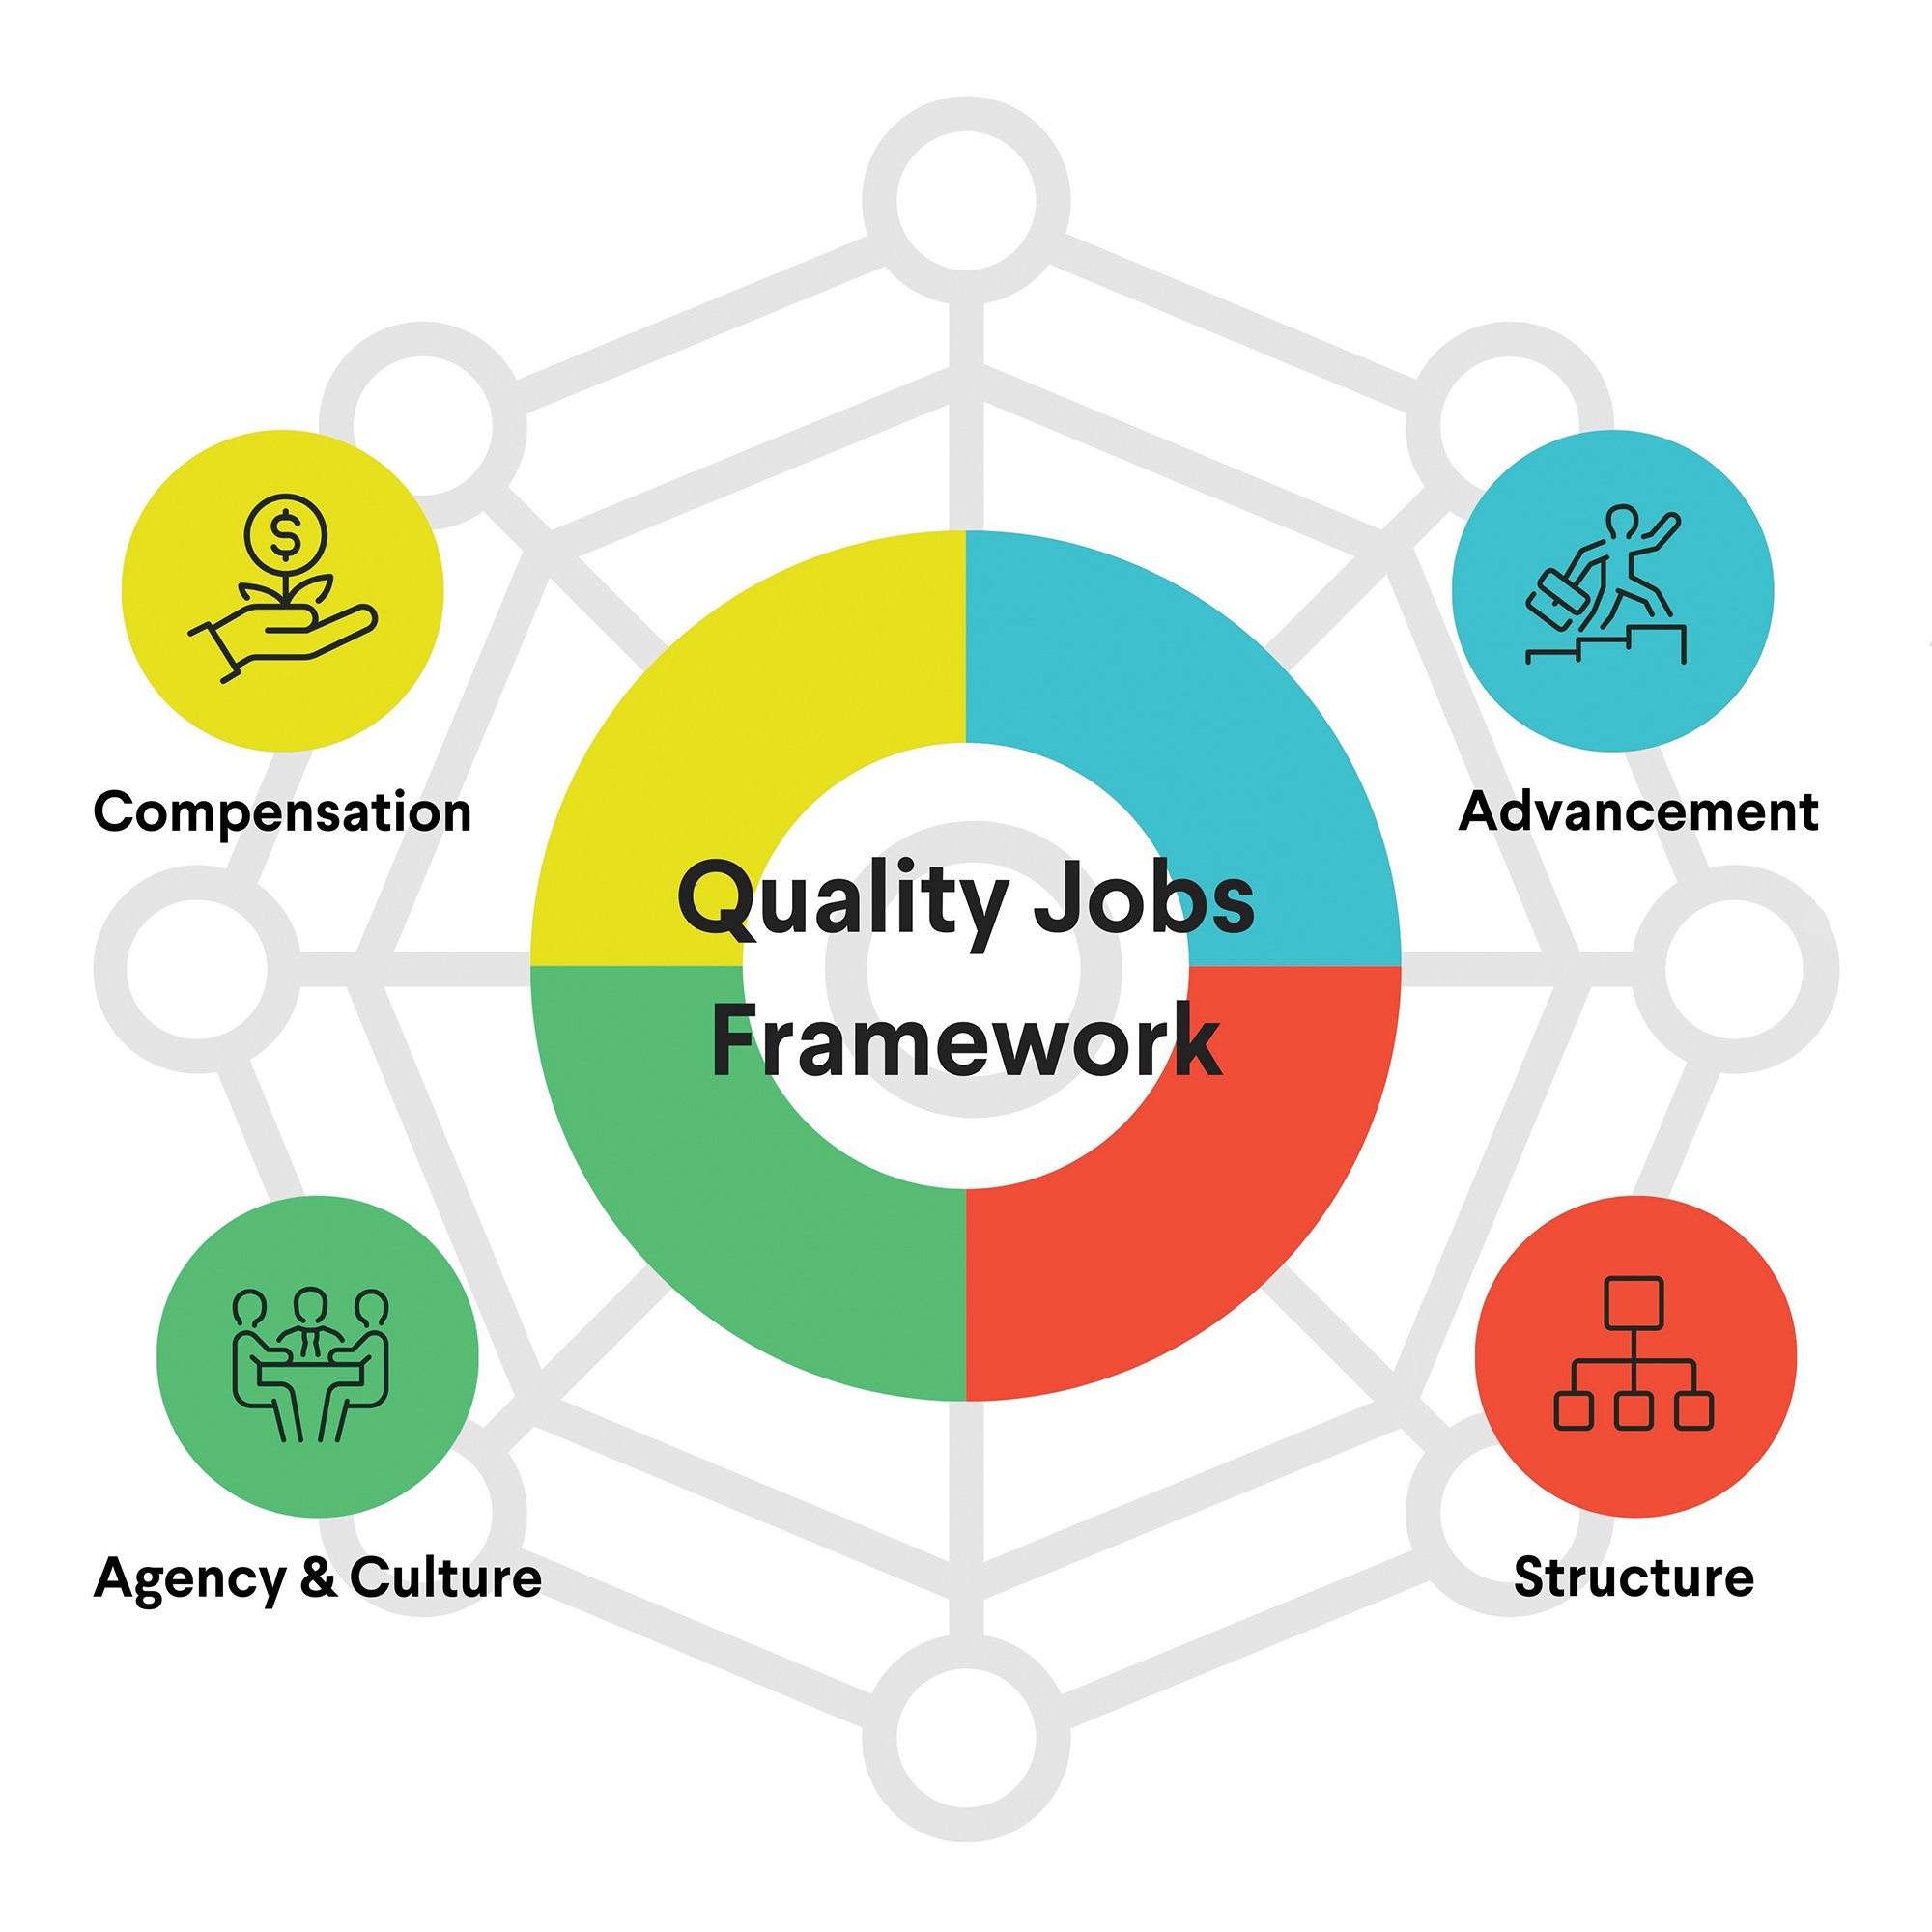 Quality Jobs Framework Overview